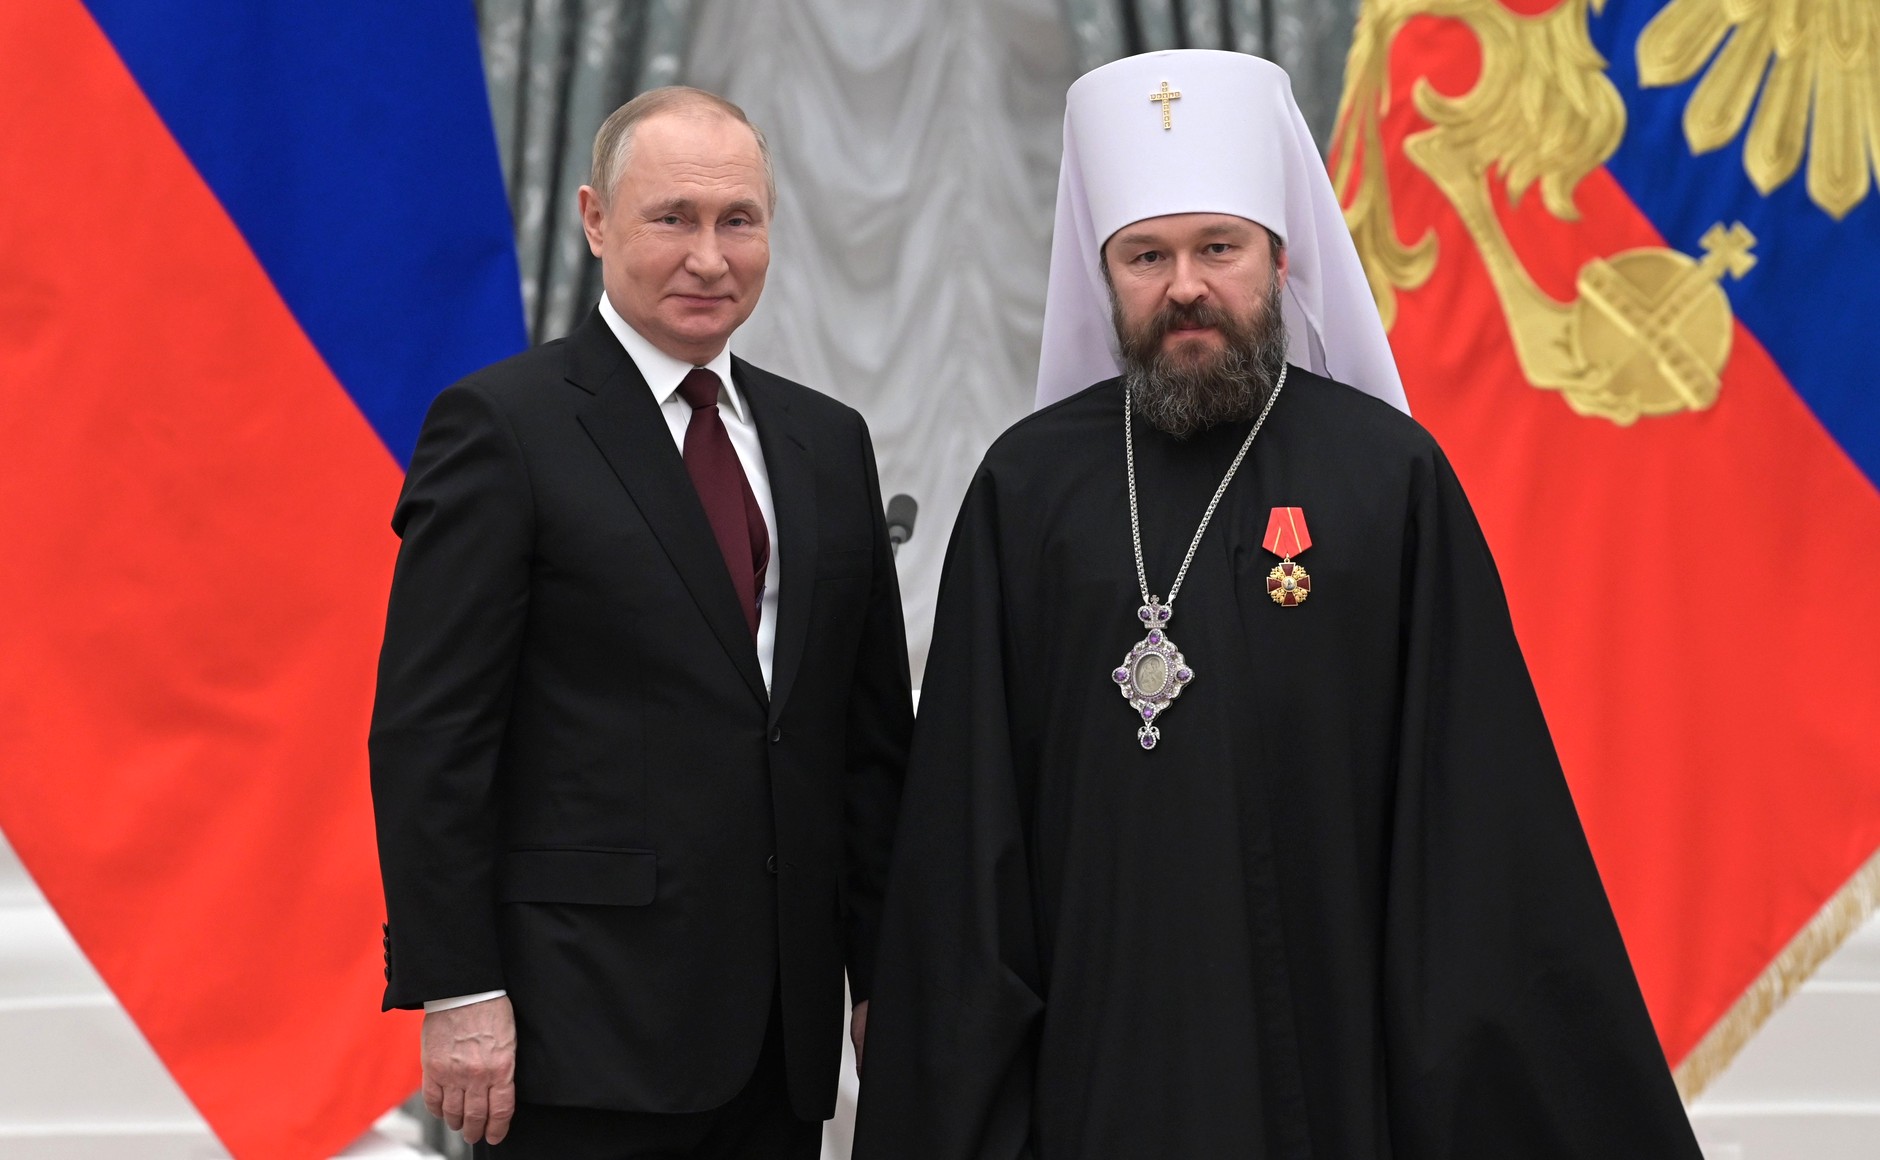 Путин наградил в Кремле митрополита Илариона и Владимира Ресина